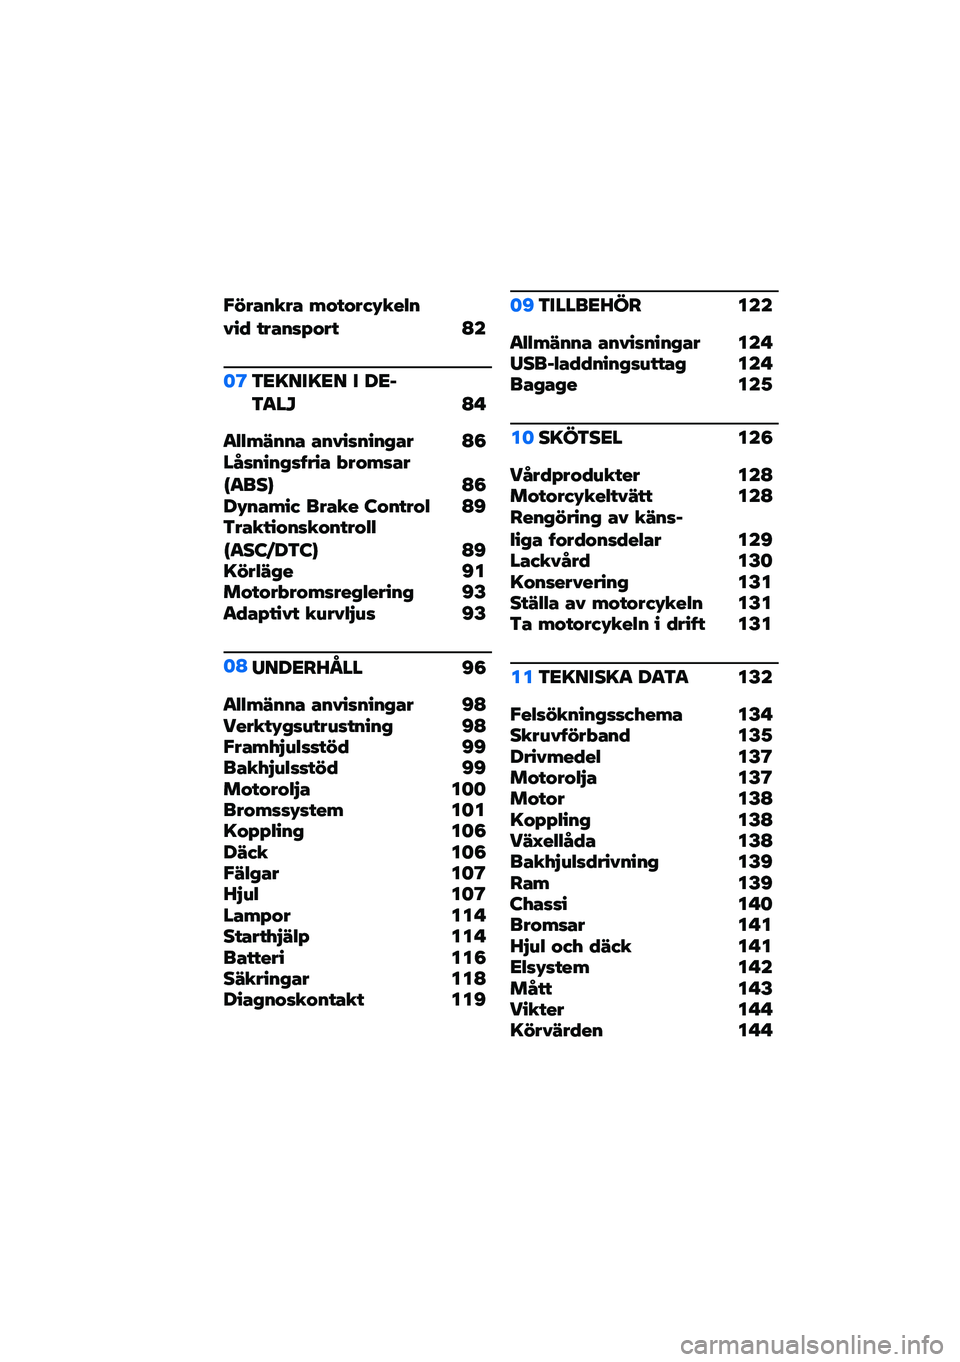 BMW MOTORRAD R NINE T URVAN G/S 2020  Instruktionsbok (in Swedish) �#�$��(�&���( �,�%� �%��)�+���.�&���4 � ��(�&��;�%��  �B�
�	�@�3�<�=���=�<� � ��<��3�
��M �B�!
�
�.�.�,�7�&�&�( �(�&����&��&��(� �B�8��>��&��&���6���( �-��%�,��(��H�